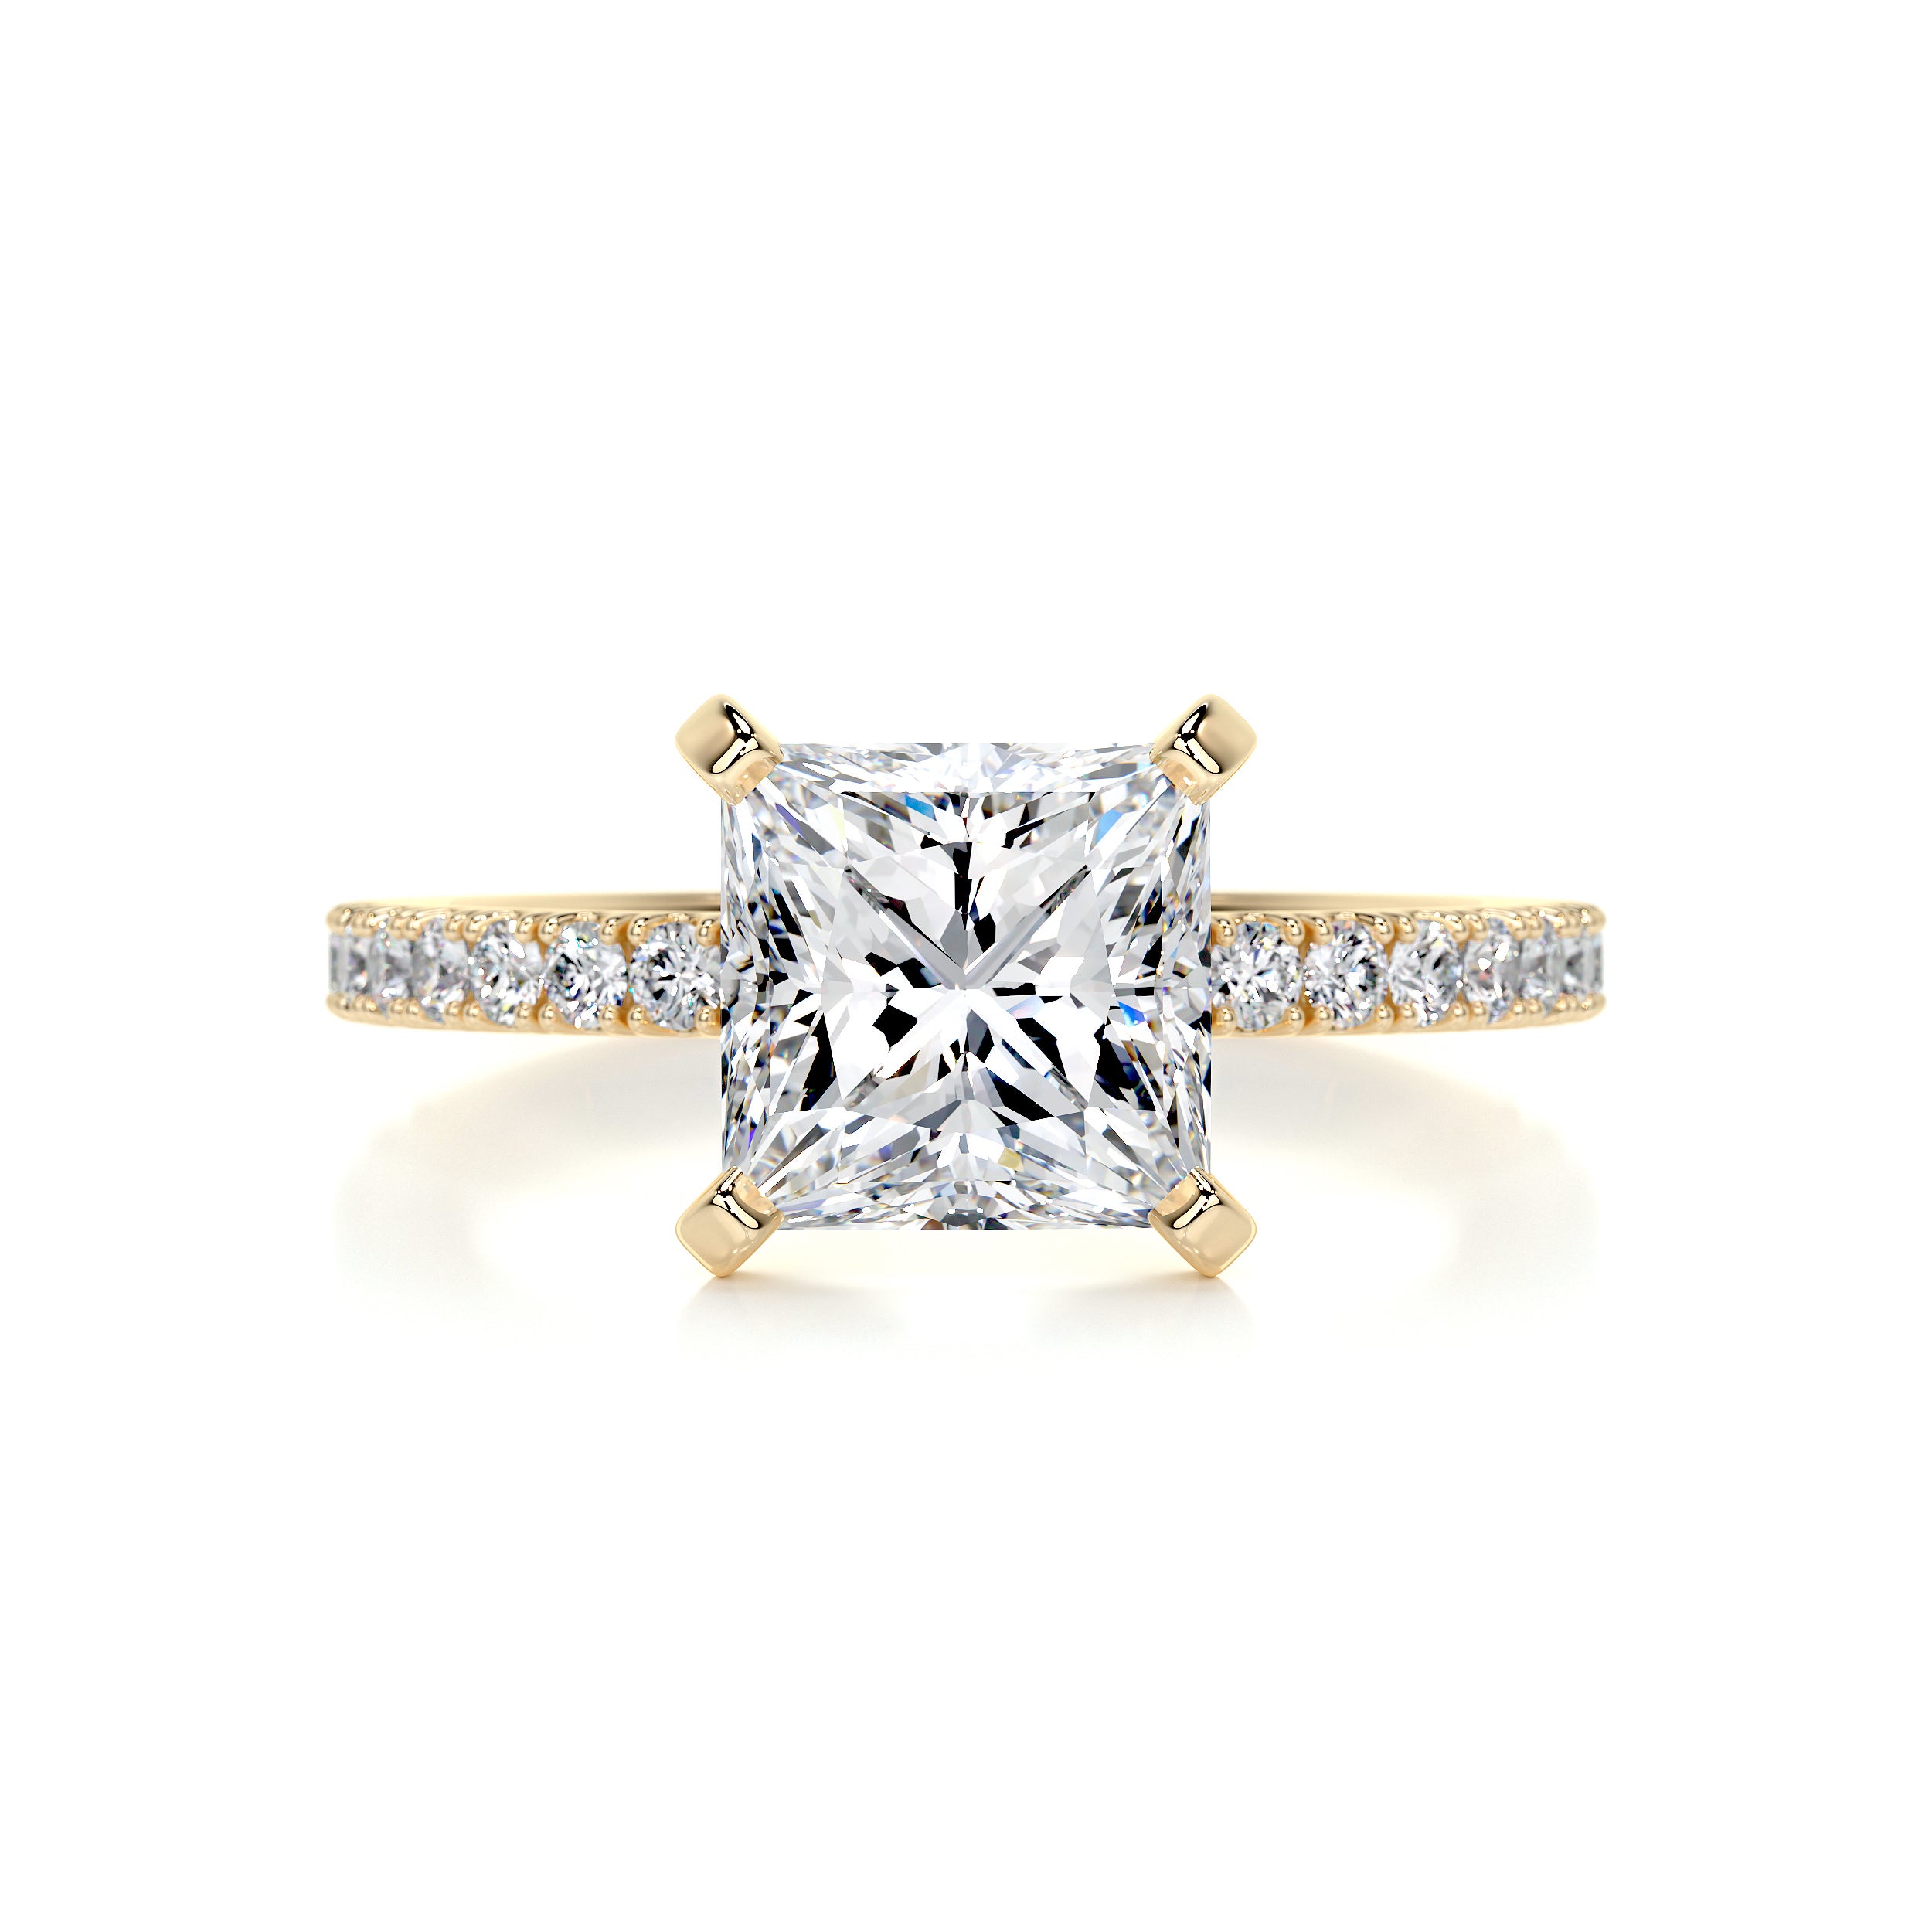 Stephanie Diamond Engagement Ring   (2.8 Carat) -18K Yellow Gold